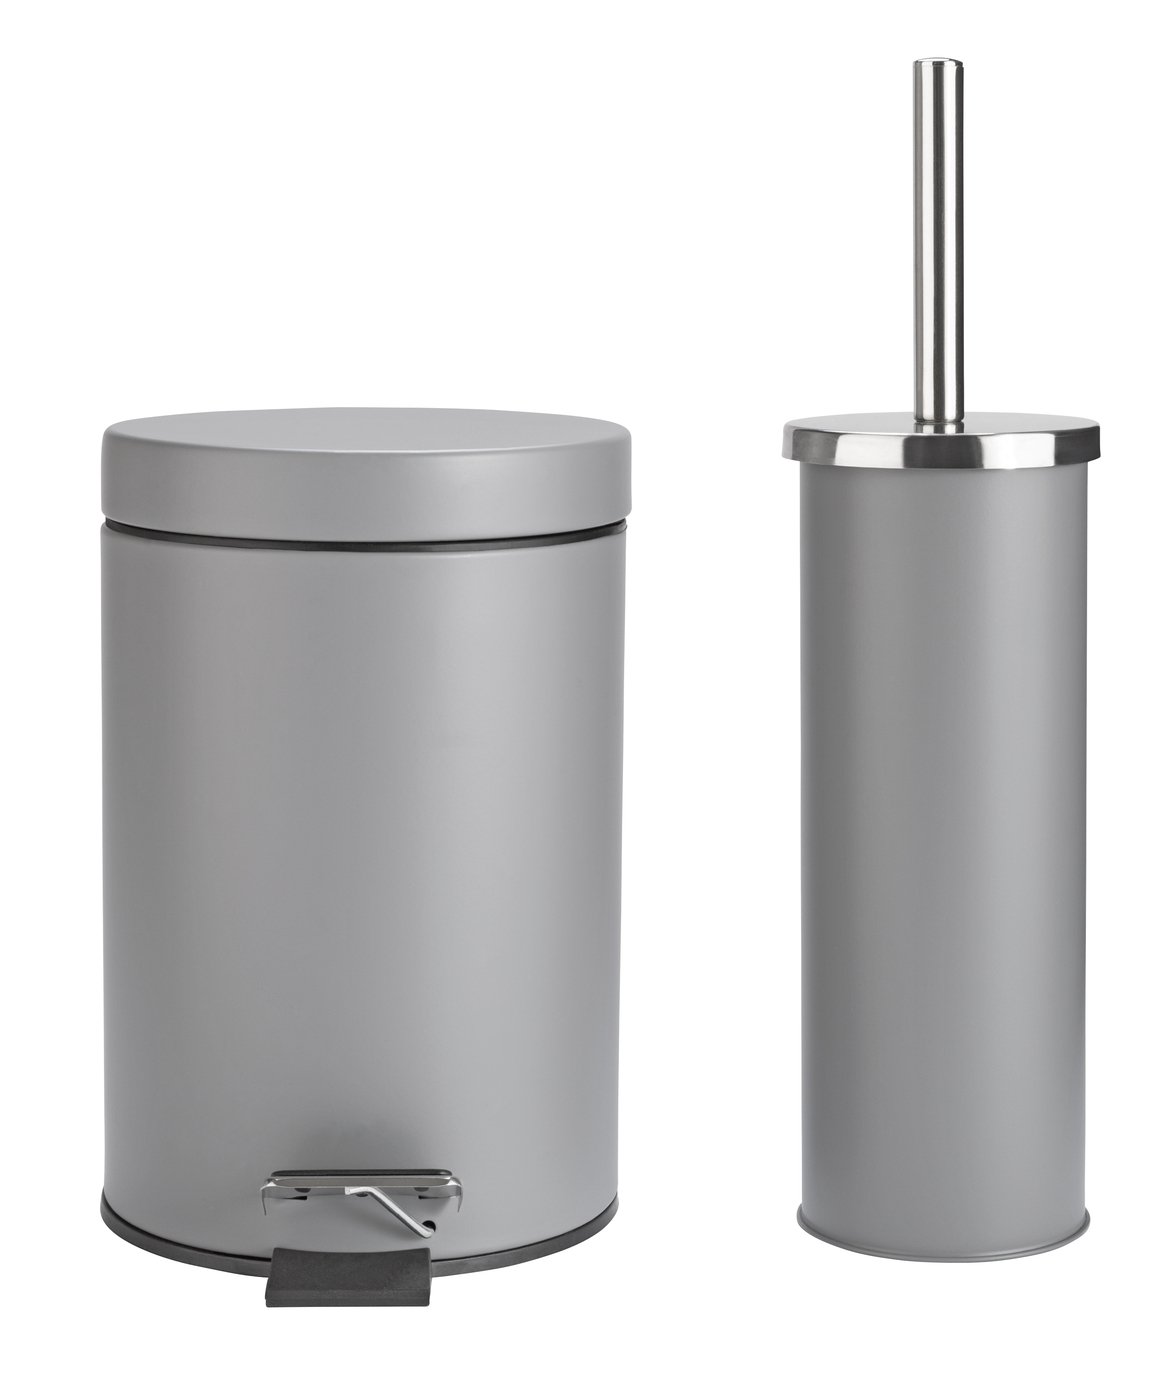 Bin and Toilet Brush Set - Flint Grey 